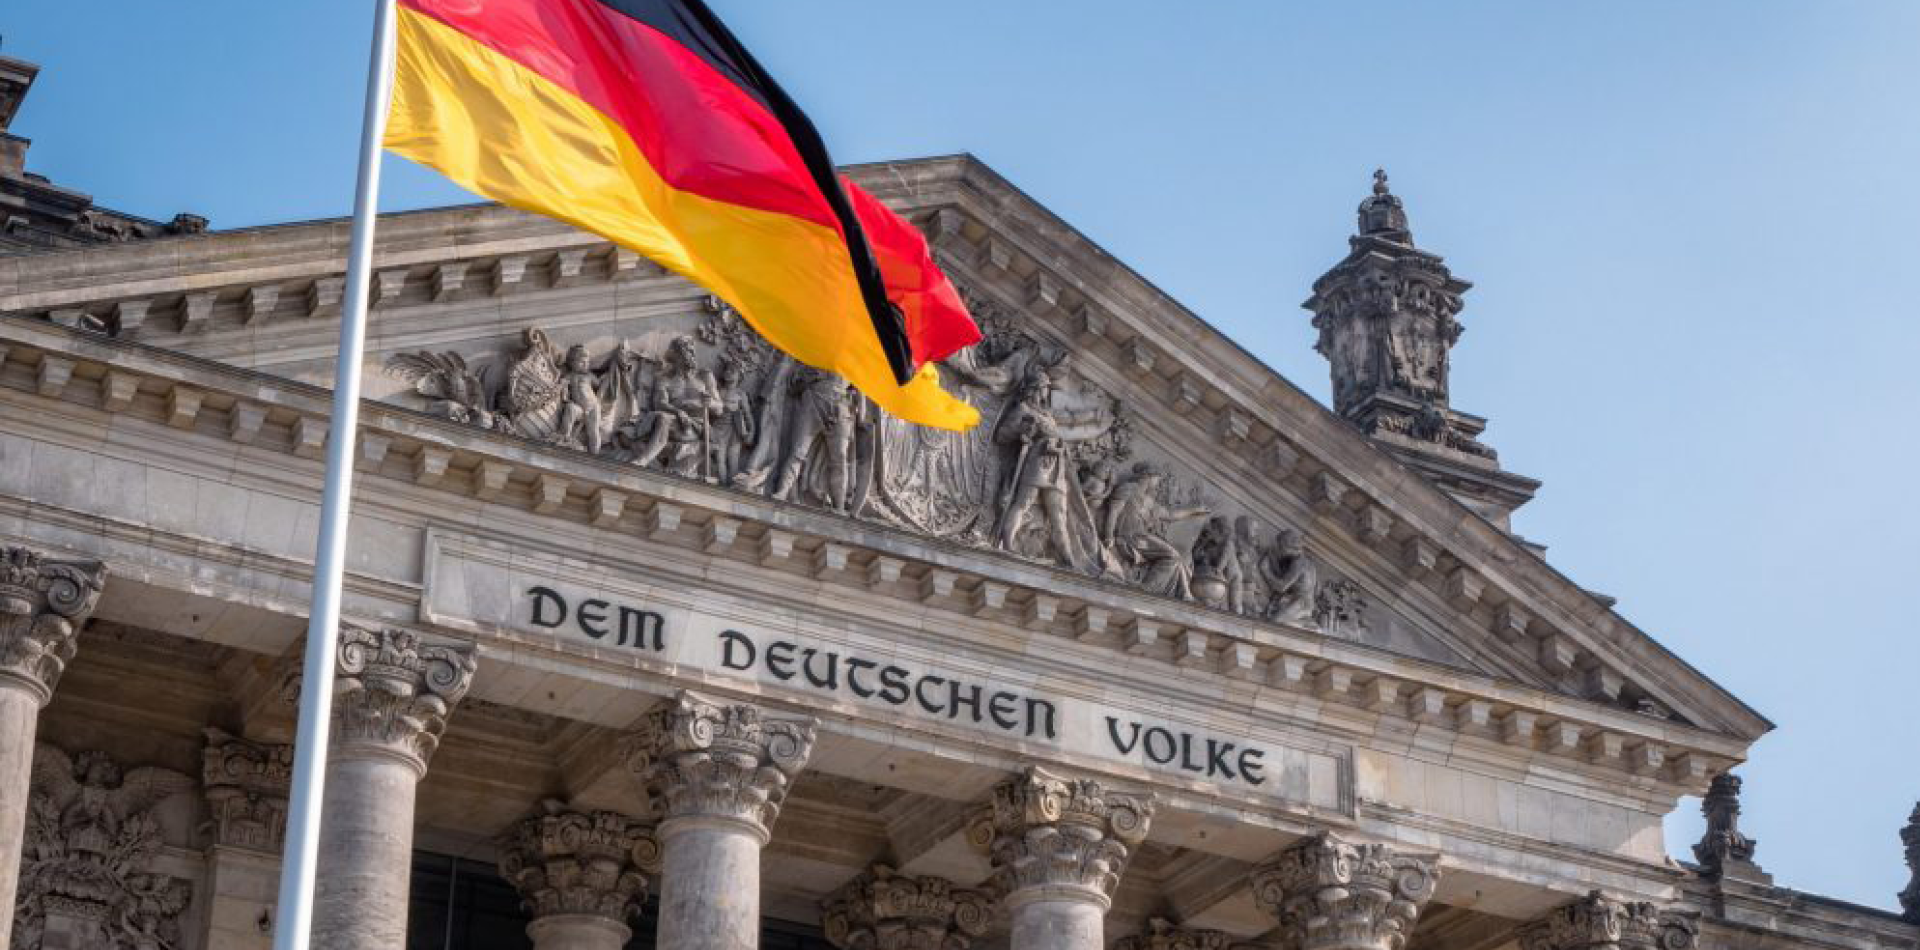 Germany’s legalisation push has lit up the European cannabis market